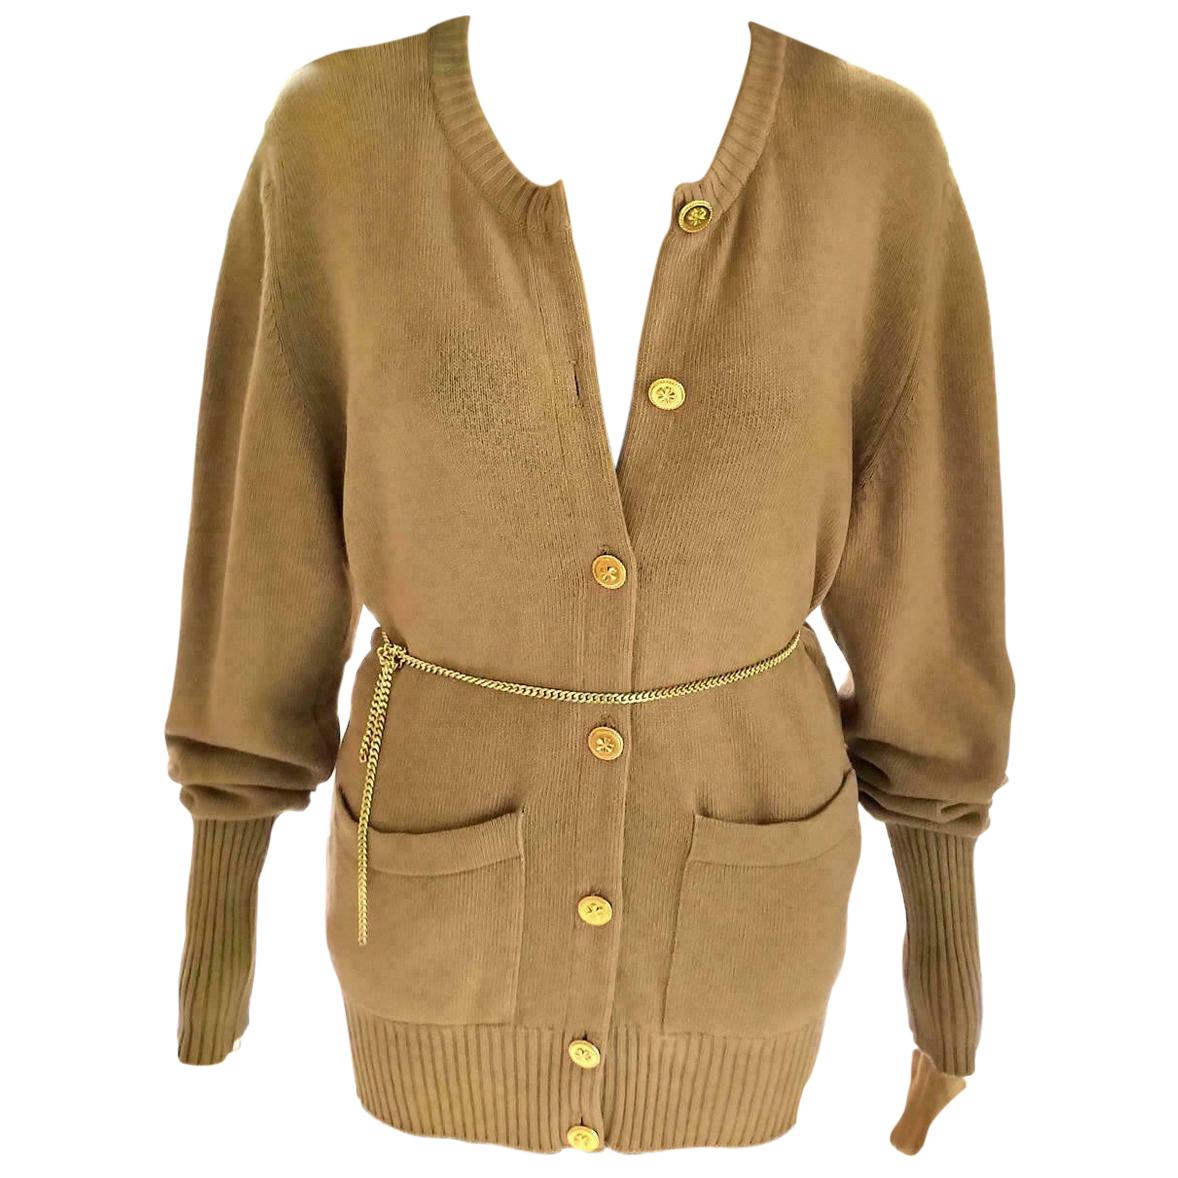 Vintage Chanel Camel Tan & Gold 100% Cashmere Sweater Cardigan FR 38/ US 4 6 For Sale